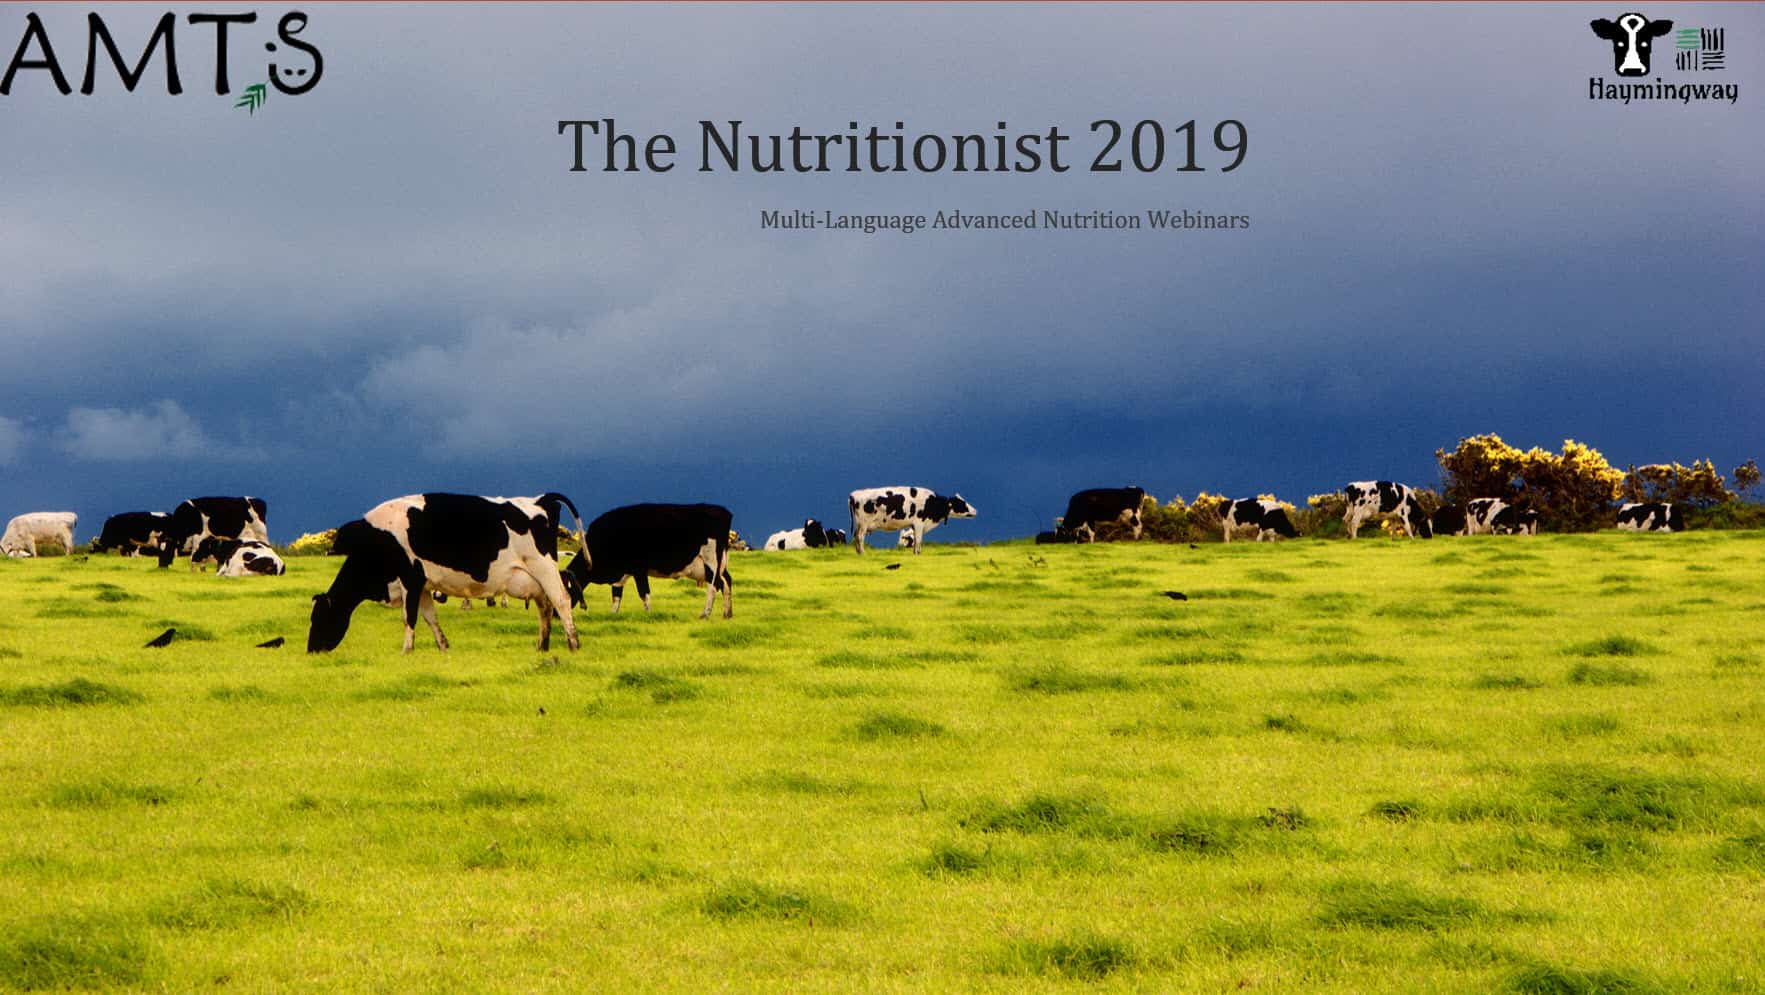 The Nutritionist Webinar Series